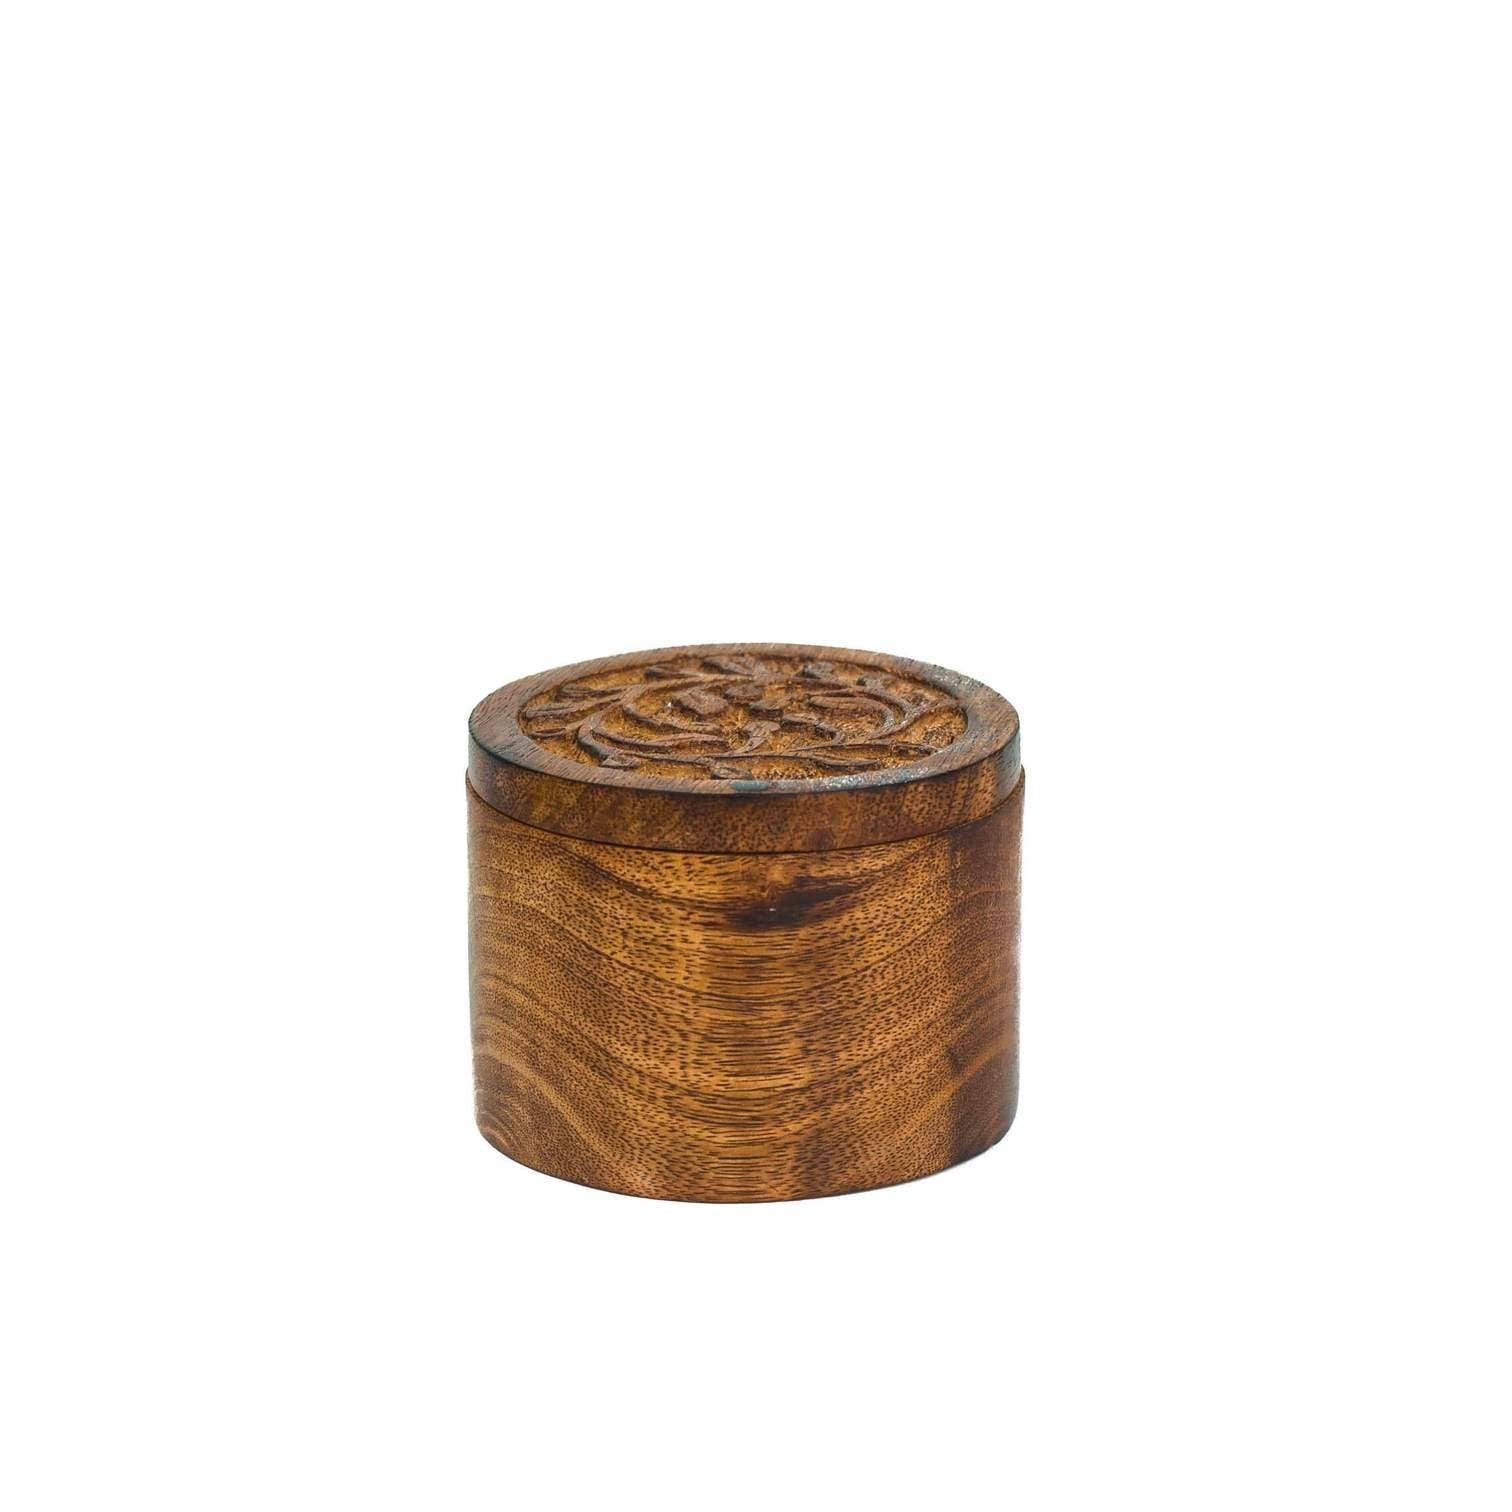 Flora Salt Cellar Spice Box With Swivel Lid - Carved Wood